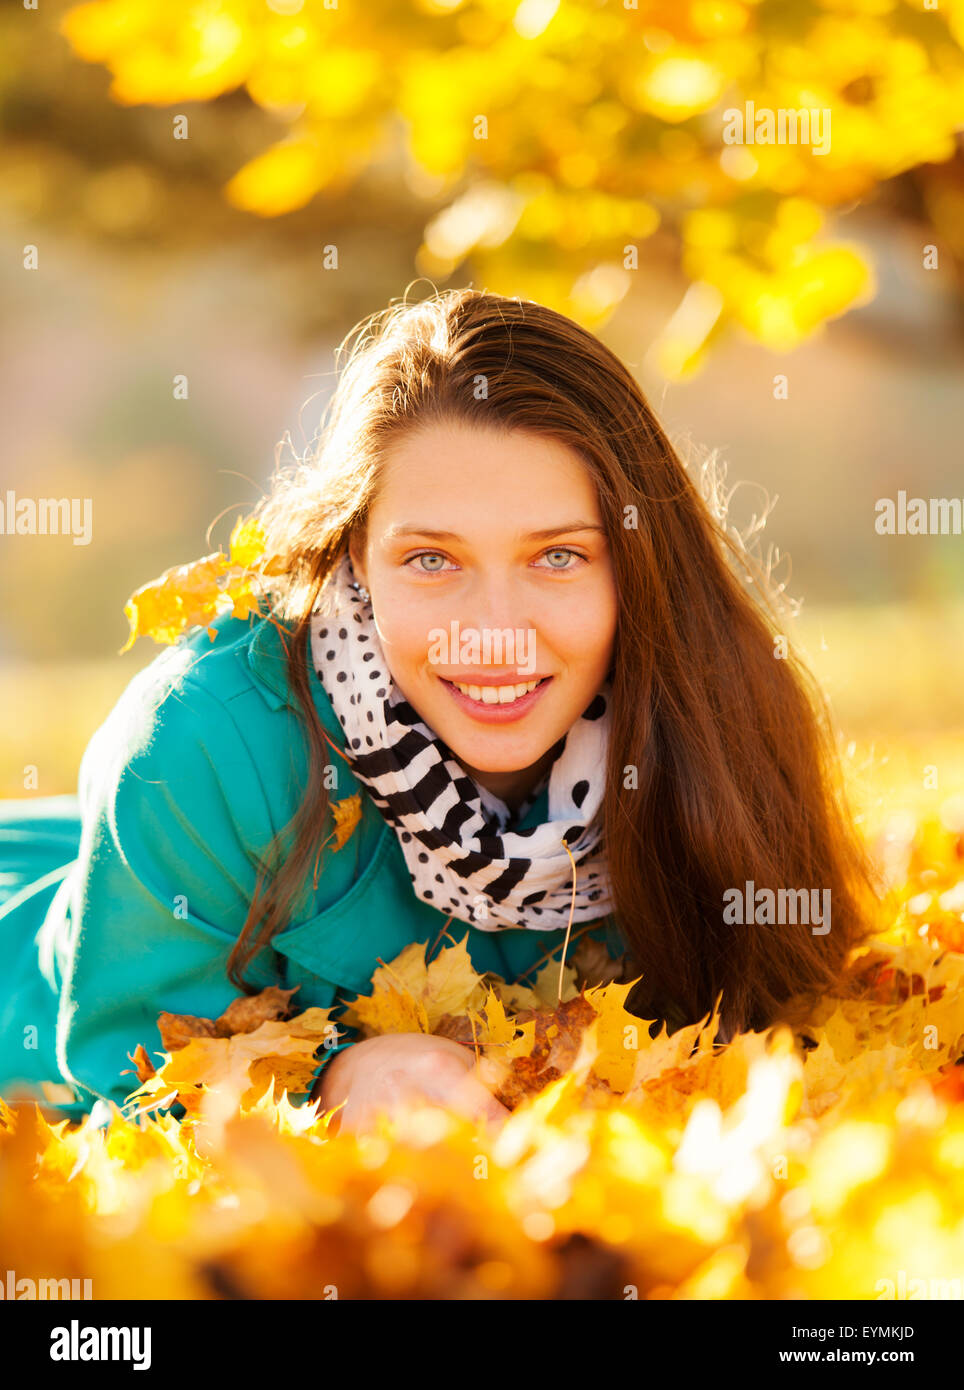 Beautiful girl lying in autumn leaves Stock Photo